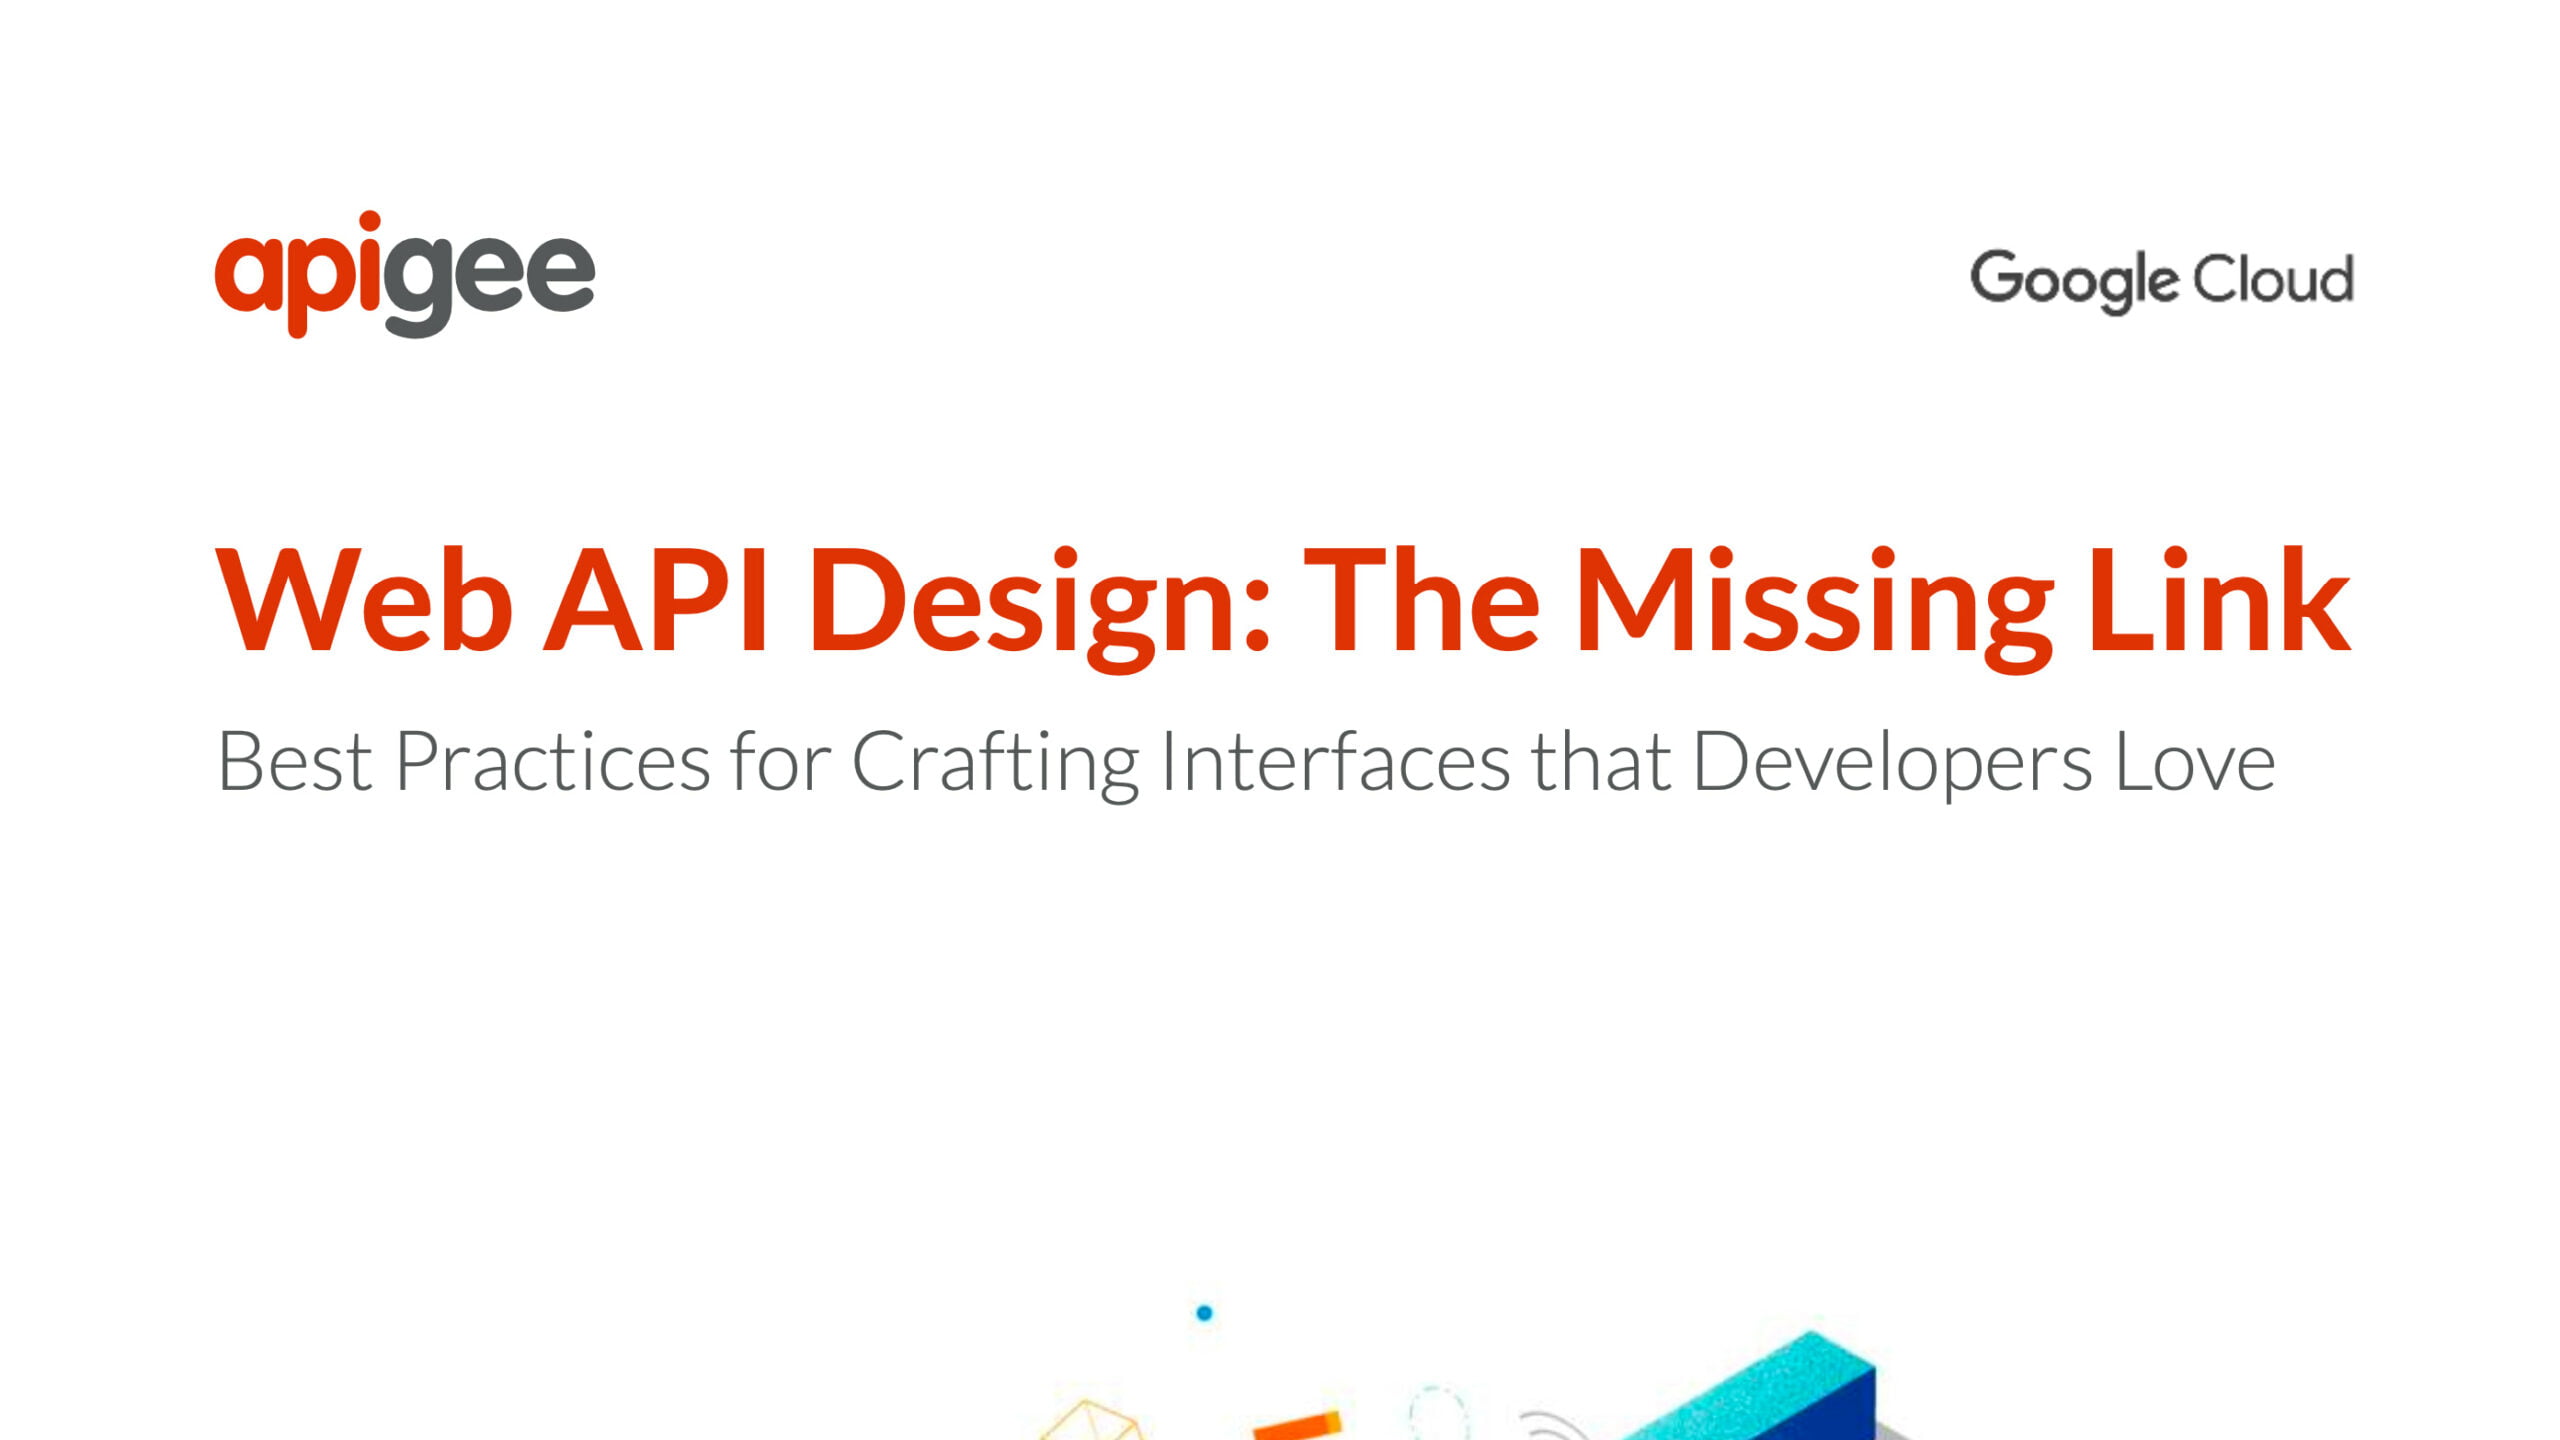 1. Web API Design